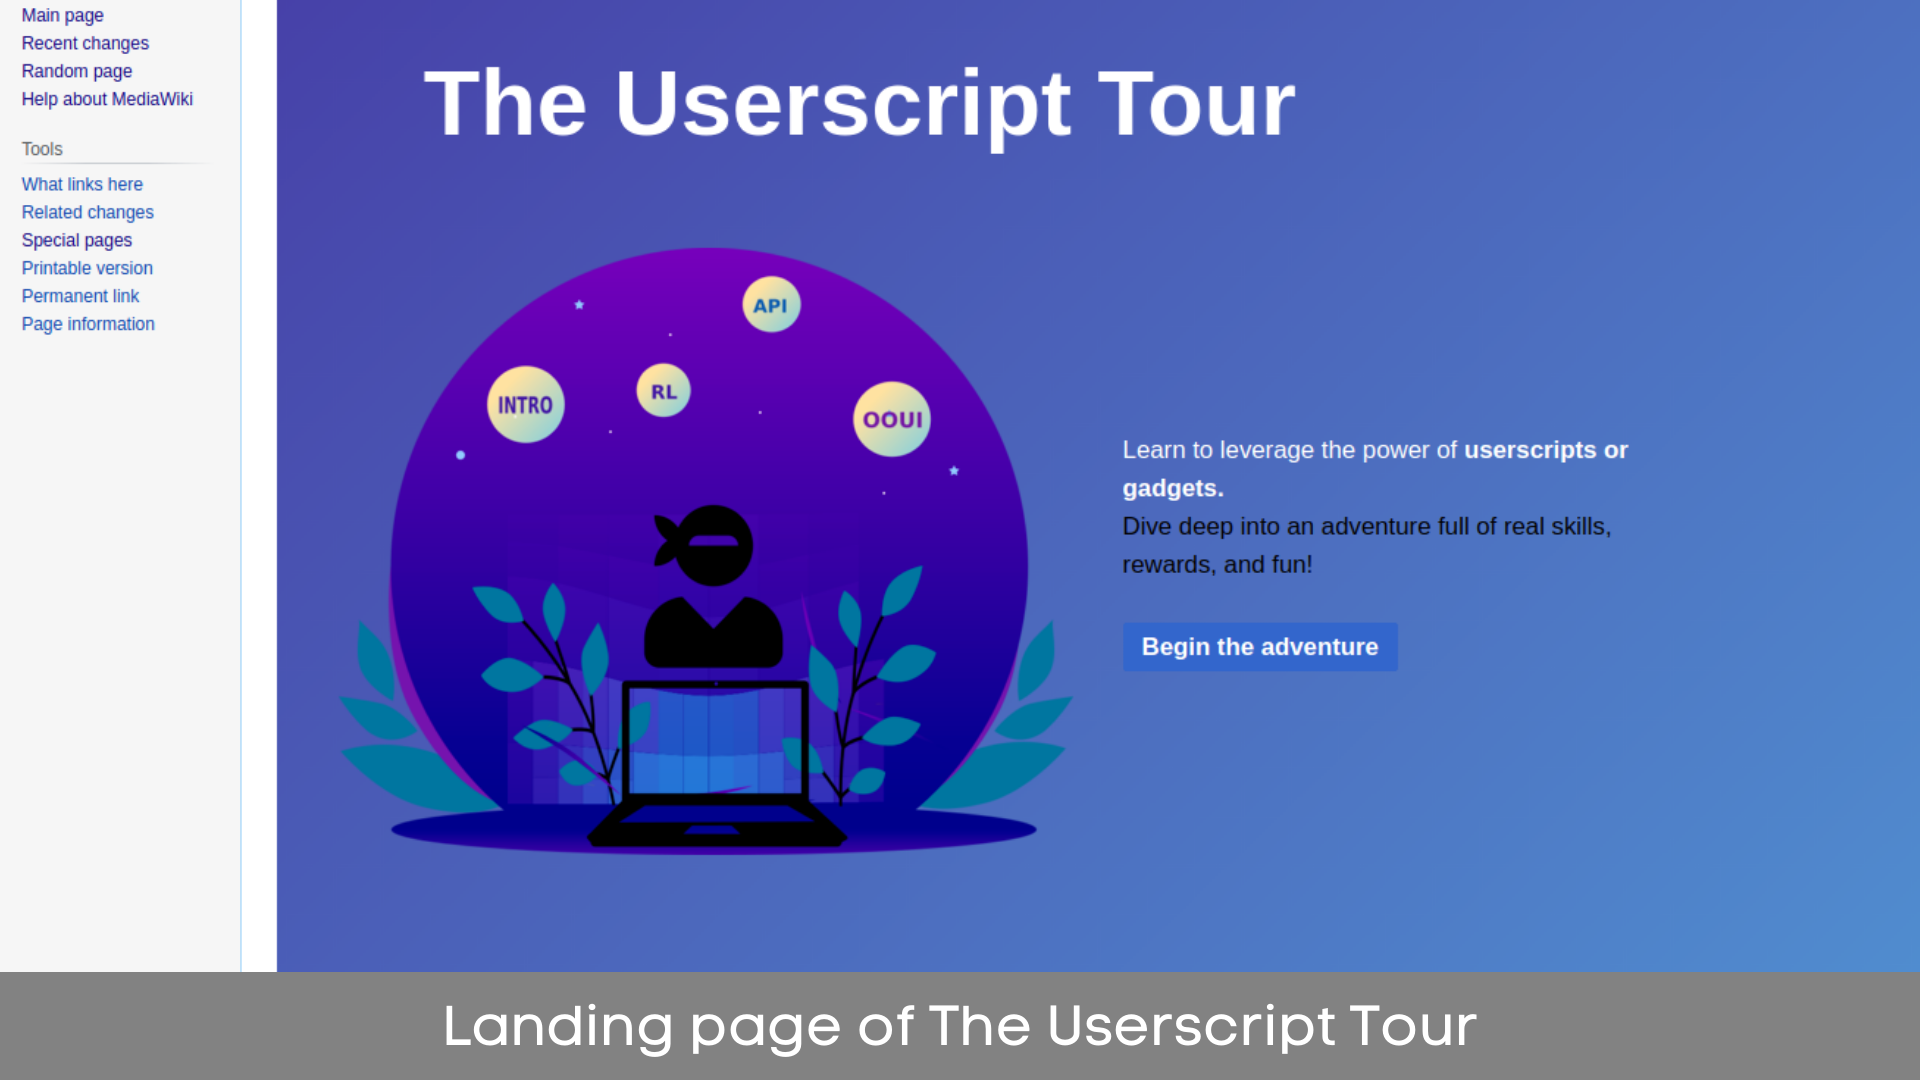 Landing page of The Userscript Tour